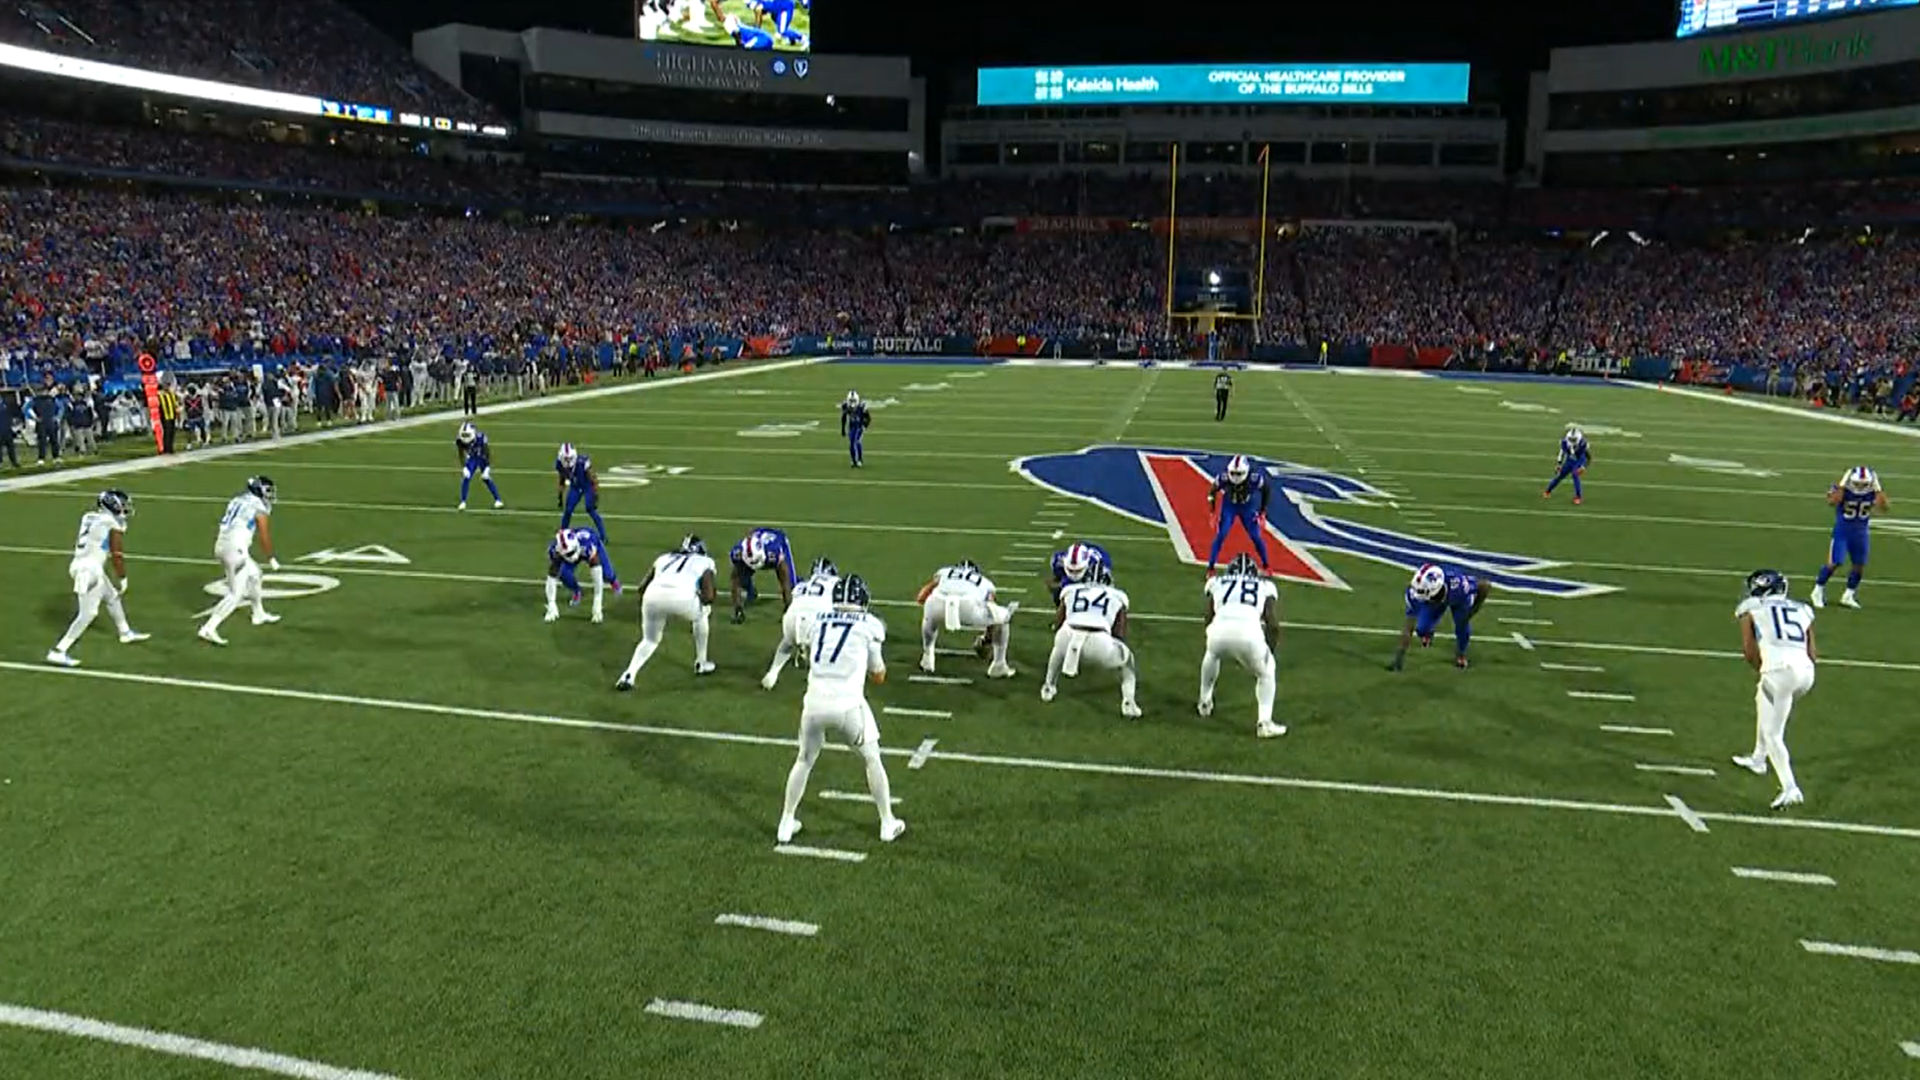 Watch: Buffalo Bills defense intercepts pass from Tennessee QB Ryan Tannehill for touchdown